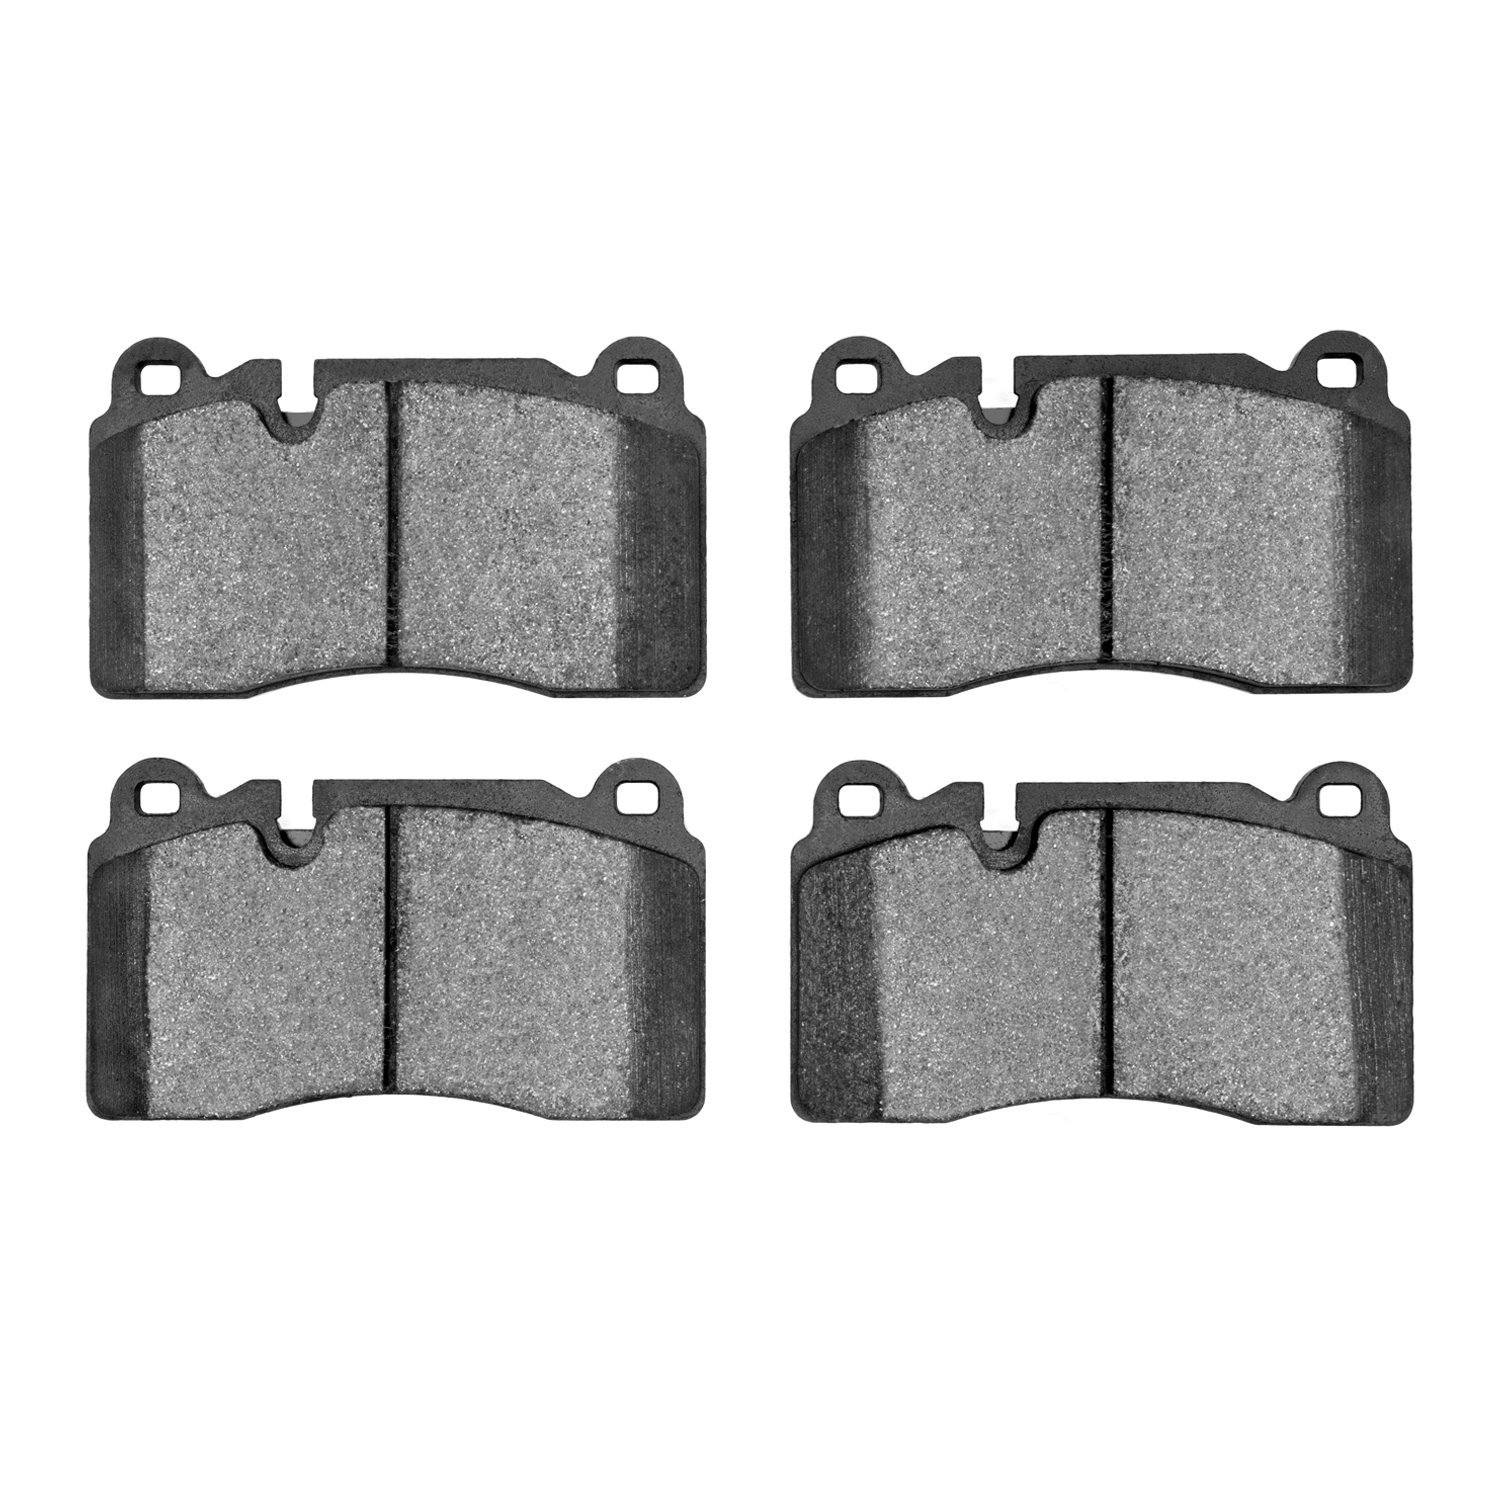 Semi-Metallic Brake Pads, Fits Select Fits Multiple Makes/Models, Position: Rear